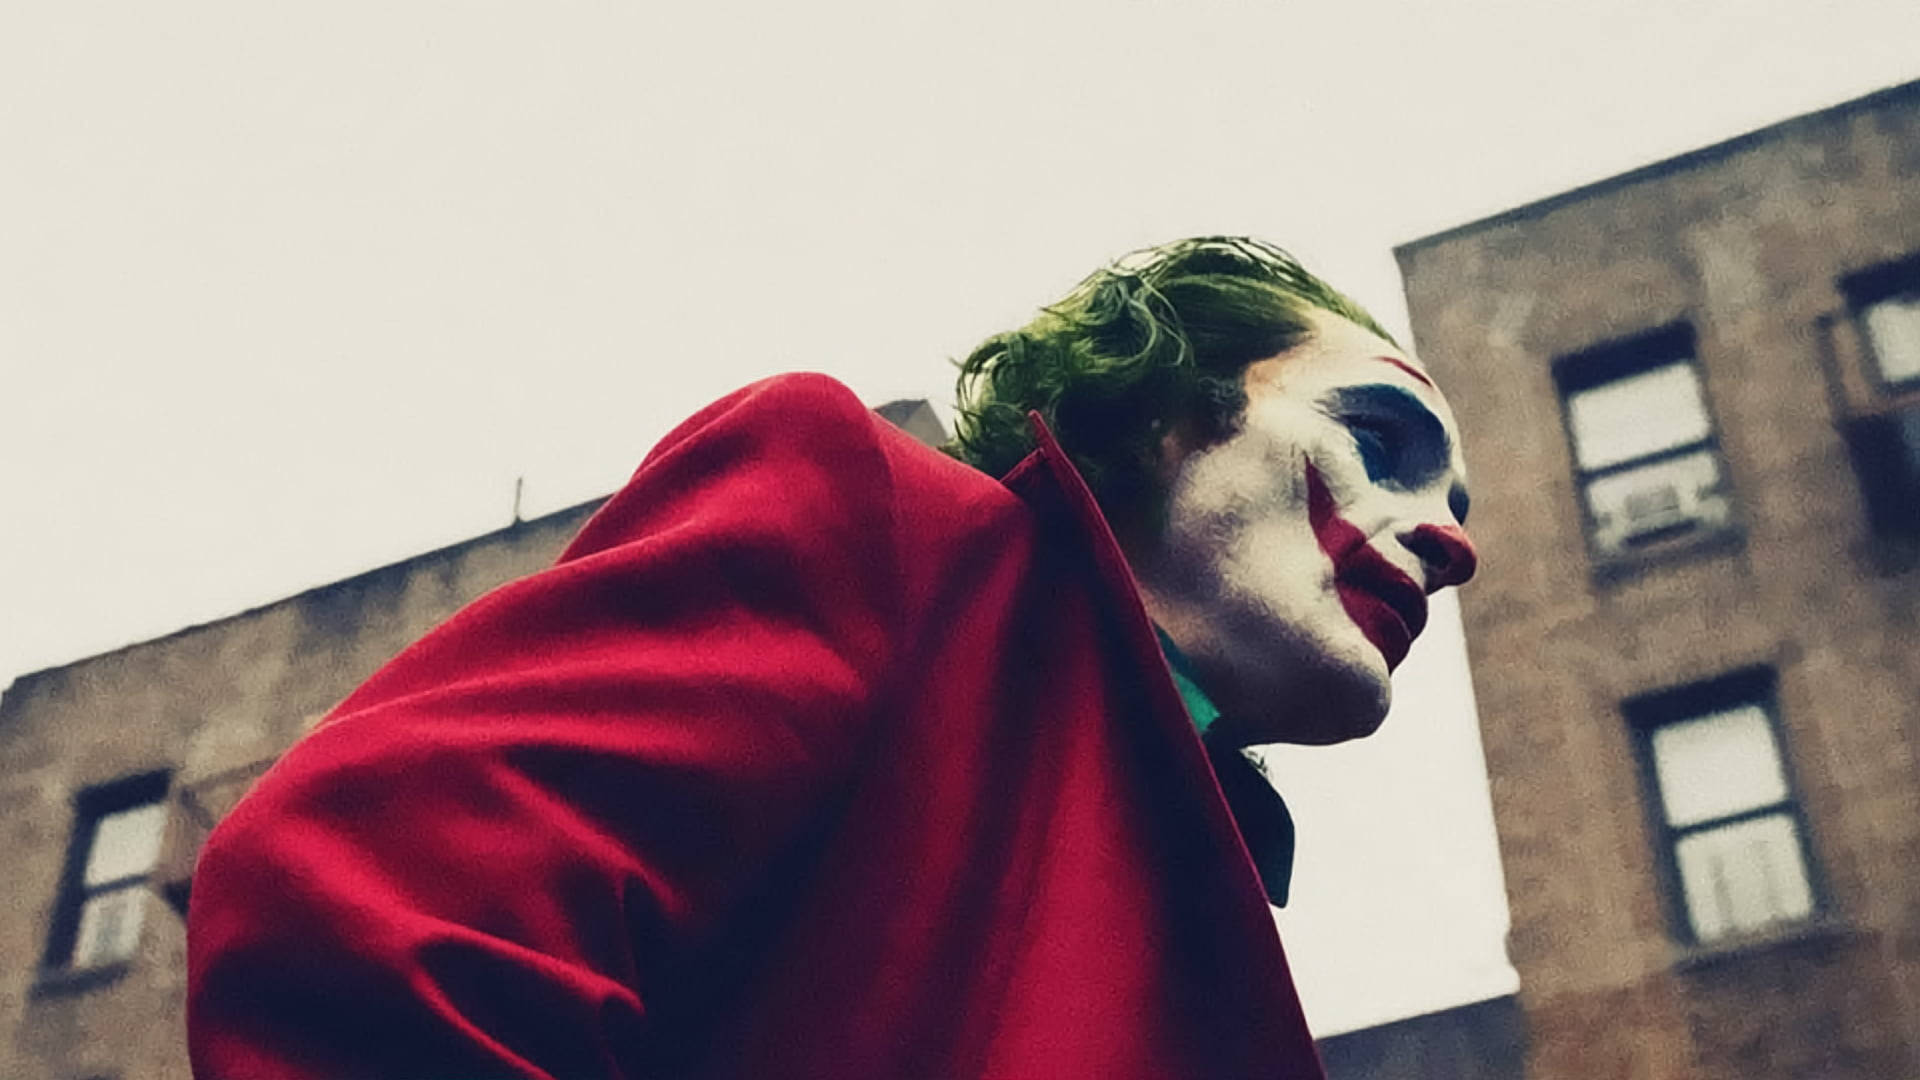 Low-shot Joker 2020 Movie Scene Wallpaper